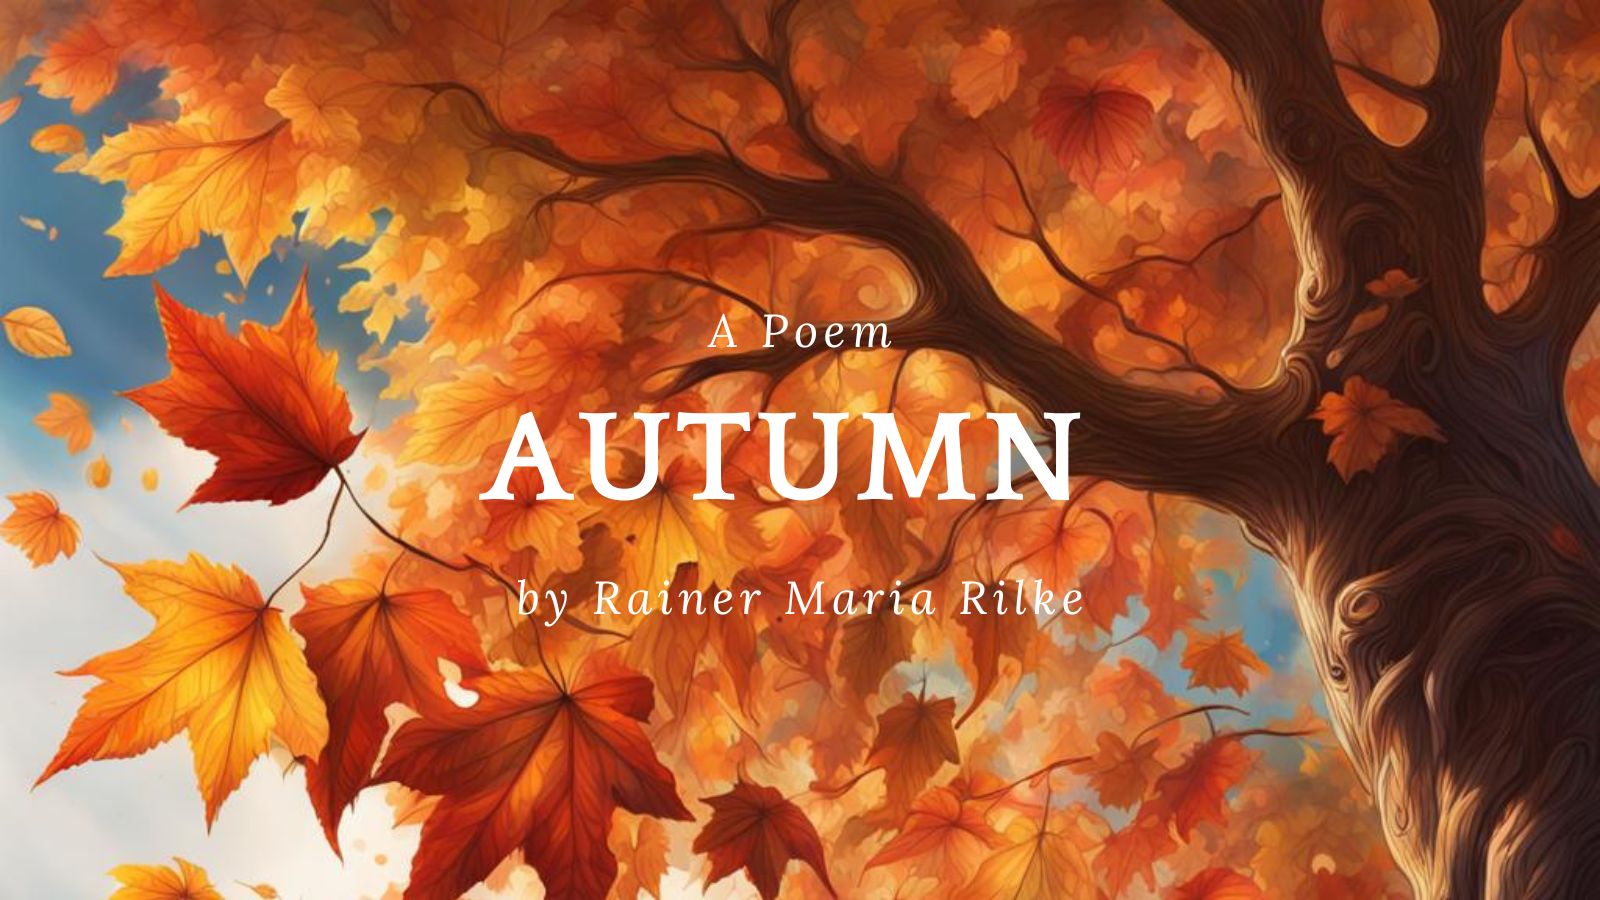 Autumn by Rainer Maria Rilke